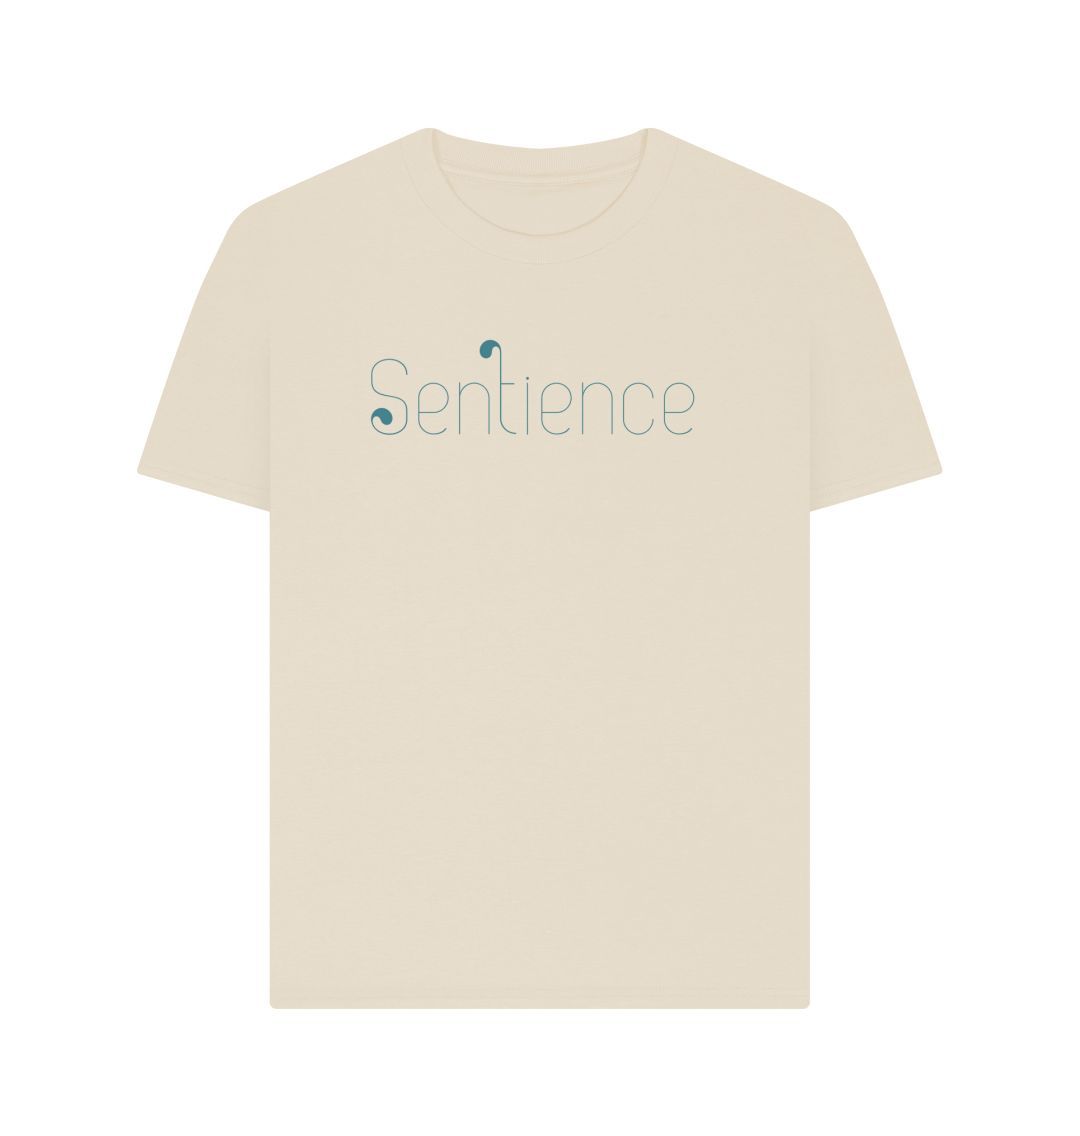 Oat Sentience T-Shirt